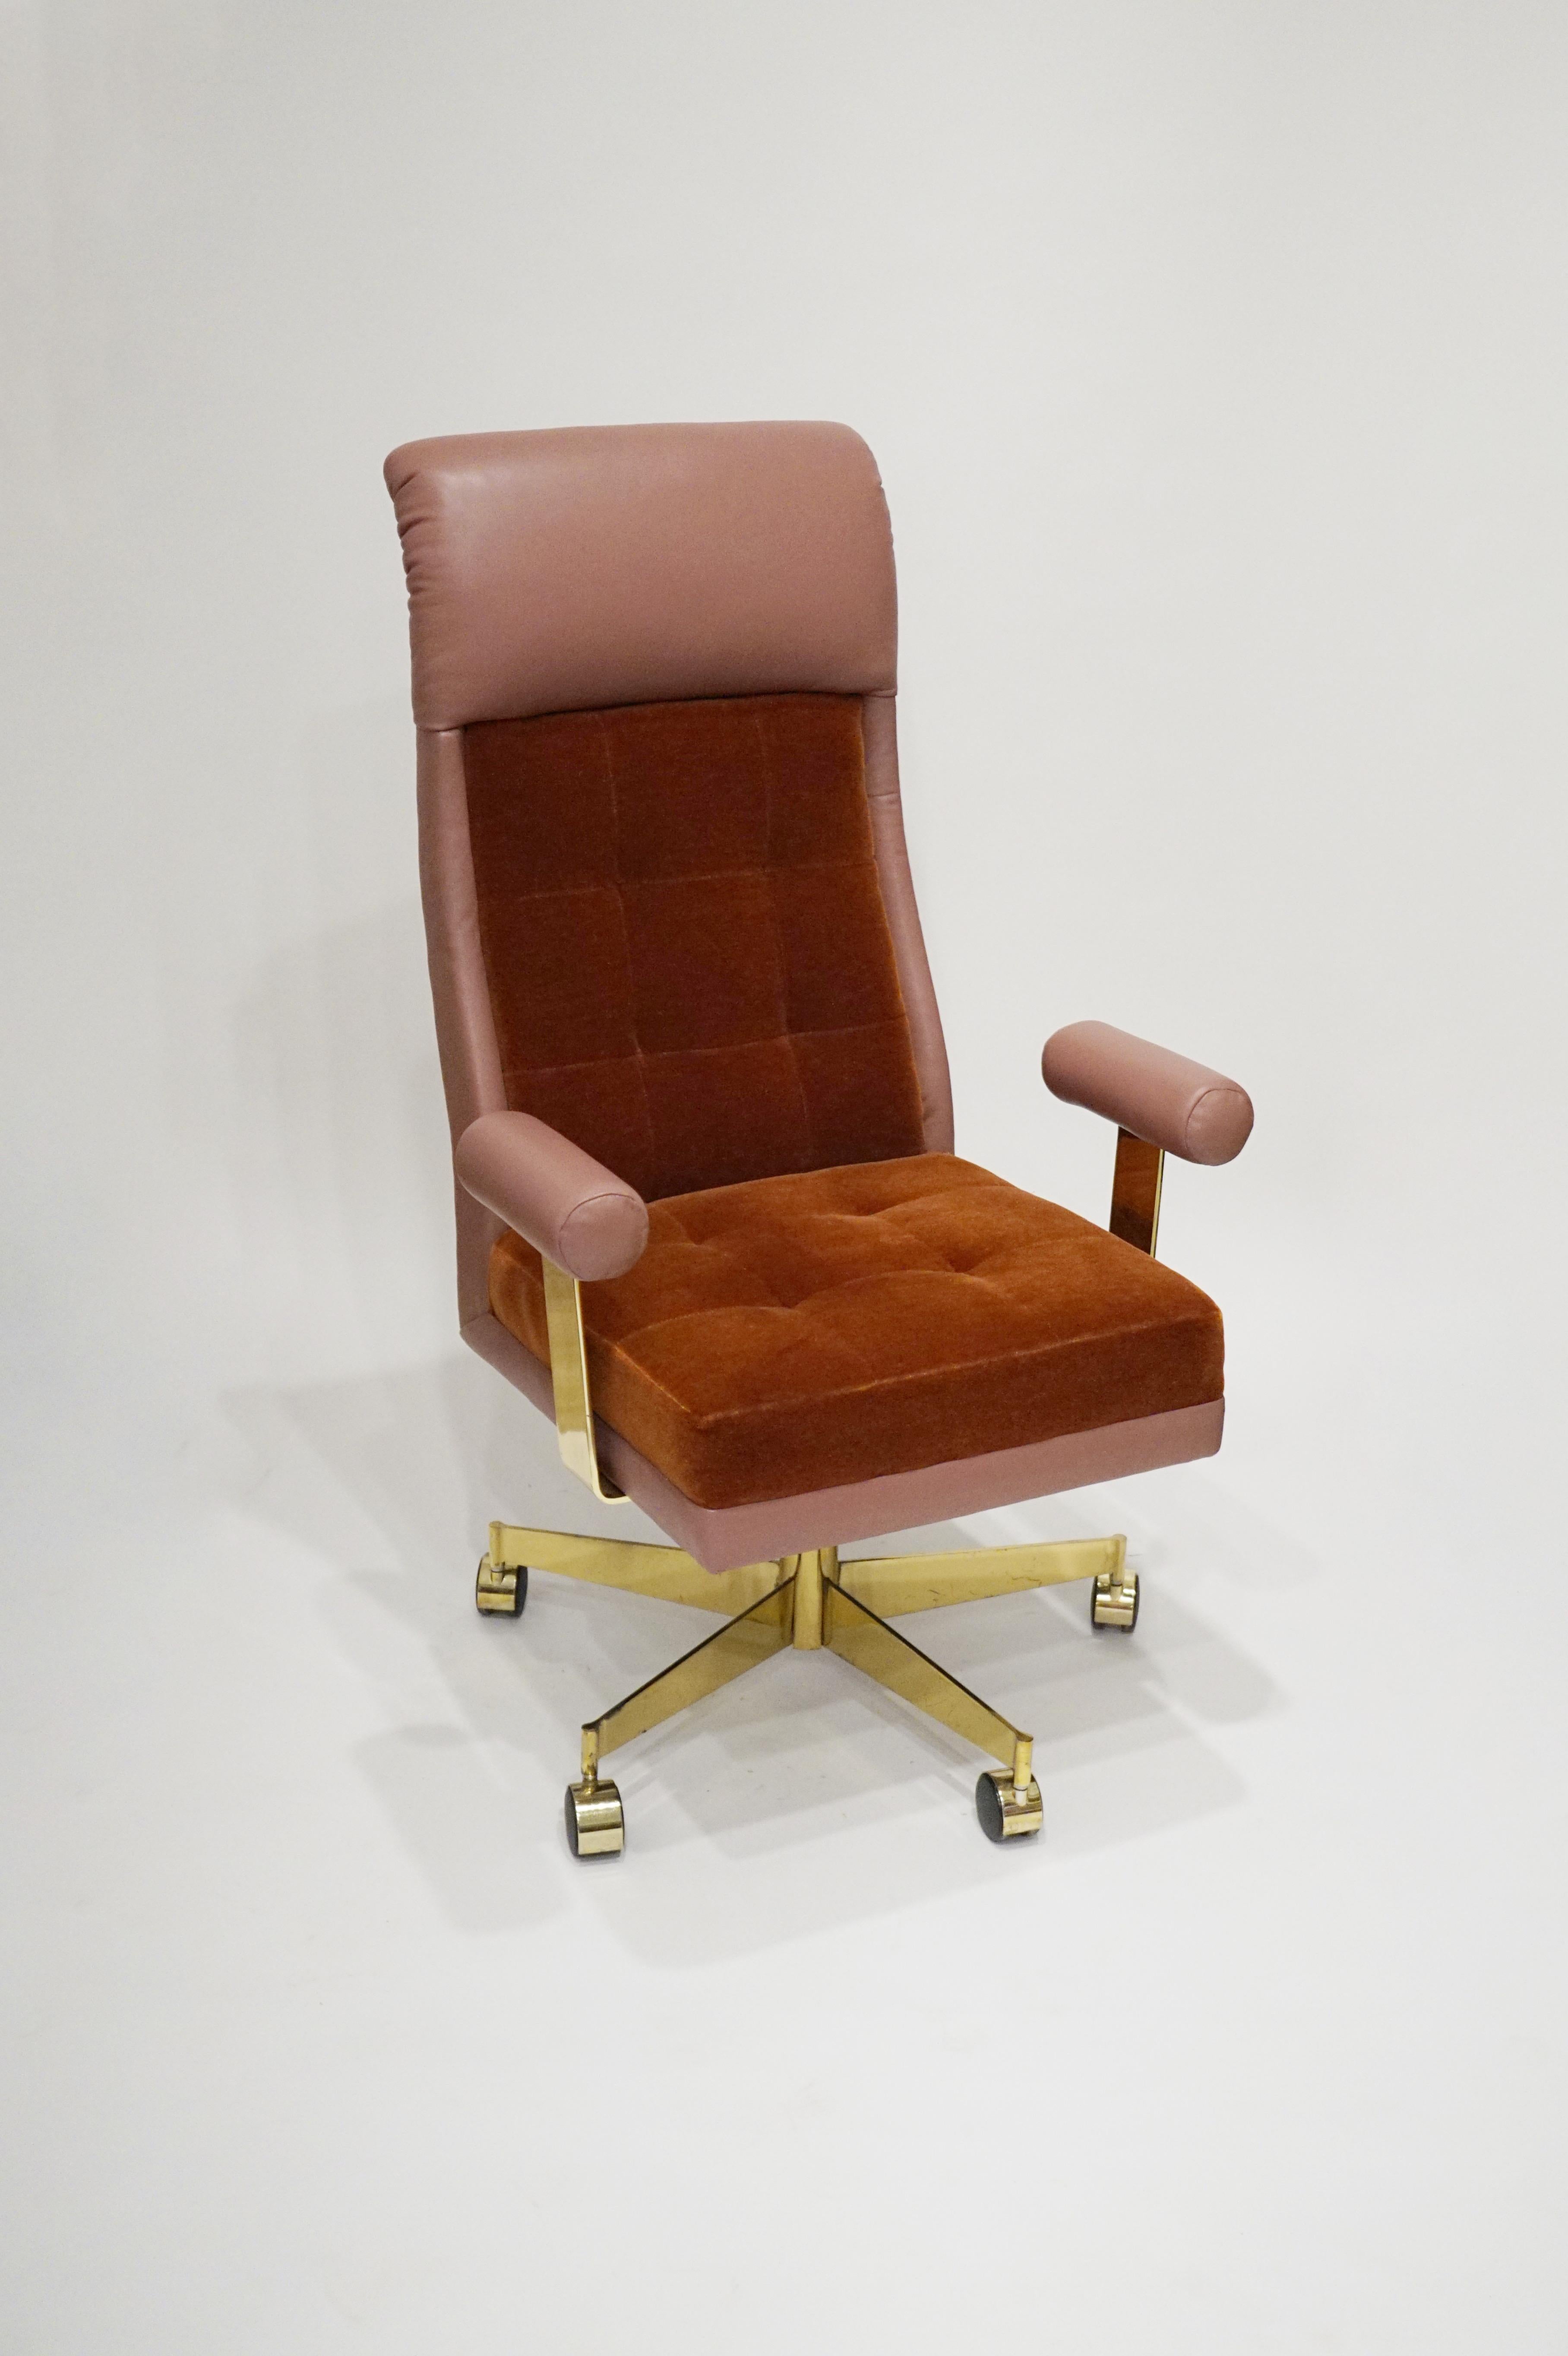 Late 20th Century Vladimir Kagan Leather and Mohair Executive Desk Chair, circa 1979, Signed 